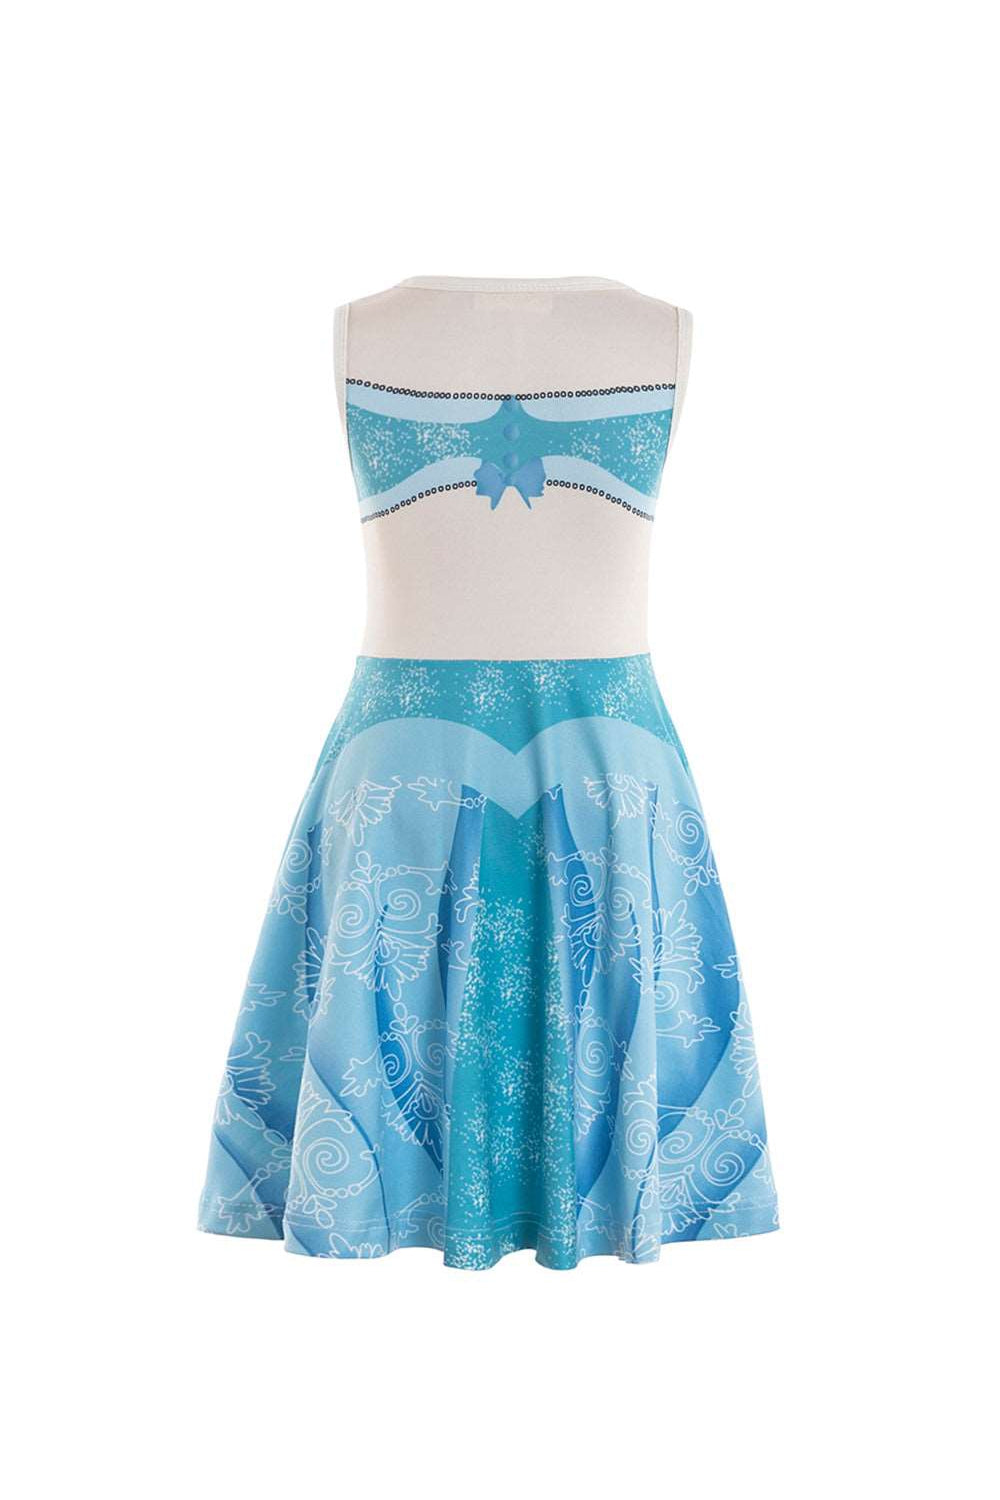 Princess Inspired Fancy Dress - Let their imagination be free - Jasmine Diamond Dress